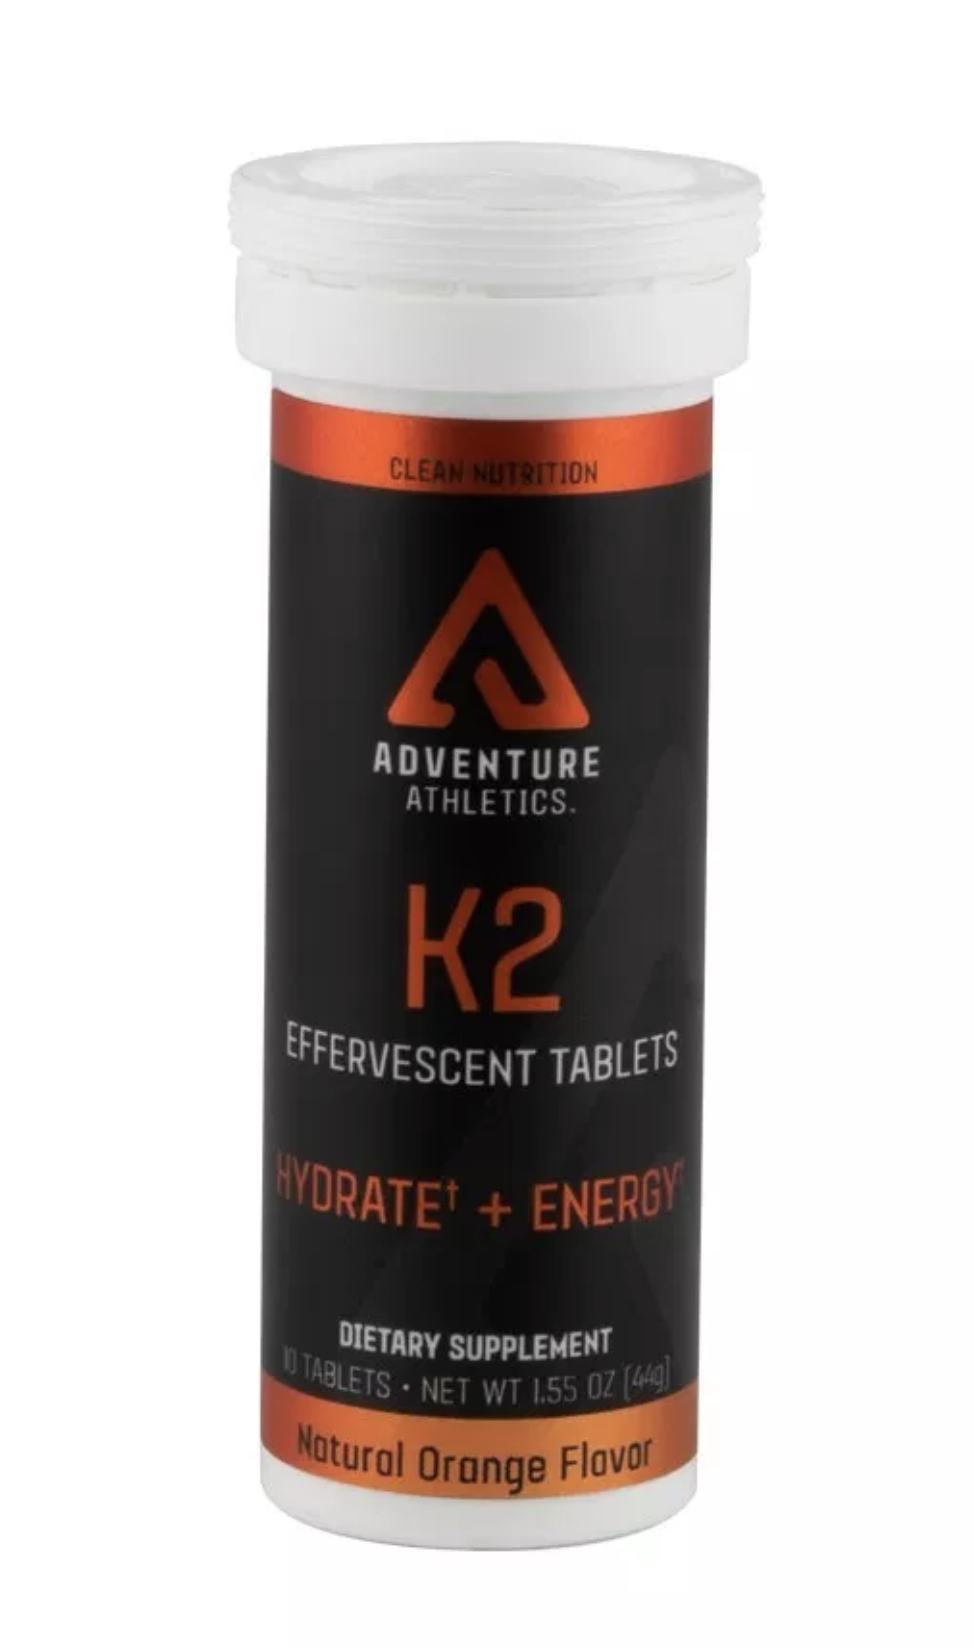 Adventure Athletics - K2 Tablets + Caffeine